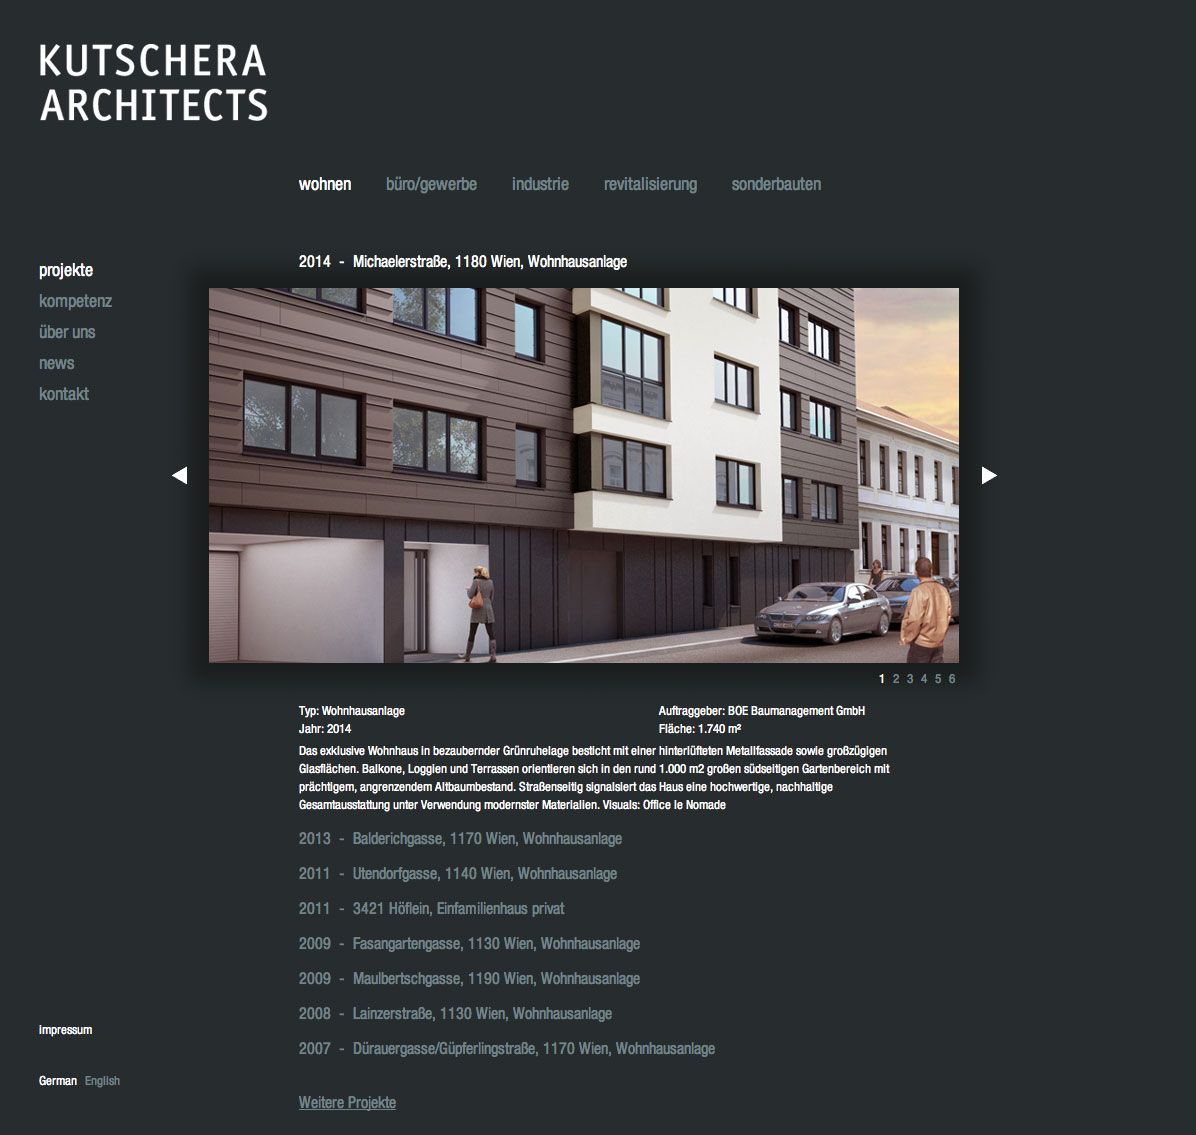 Kutschera Architects (pixelpoems)